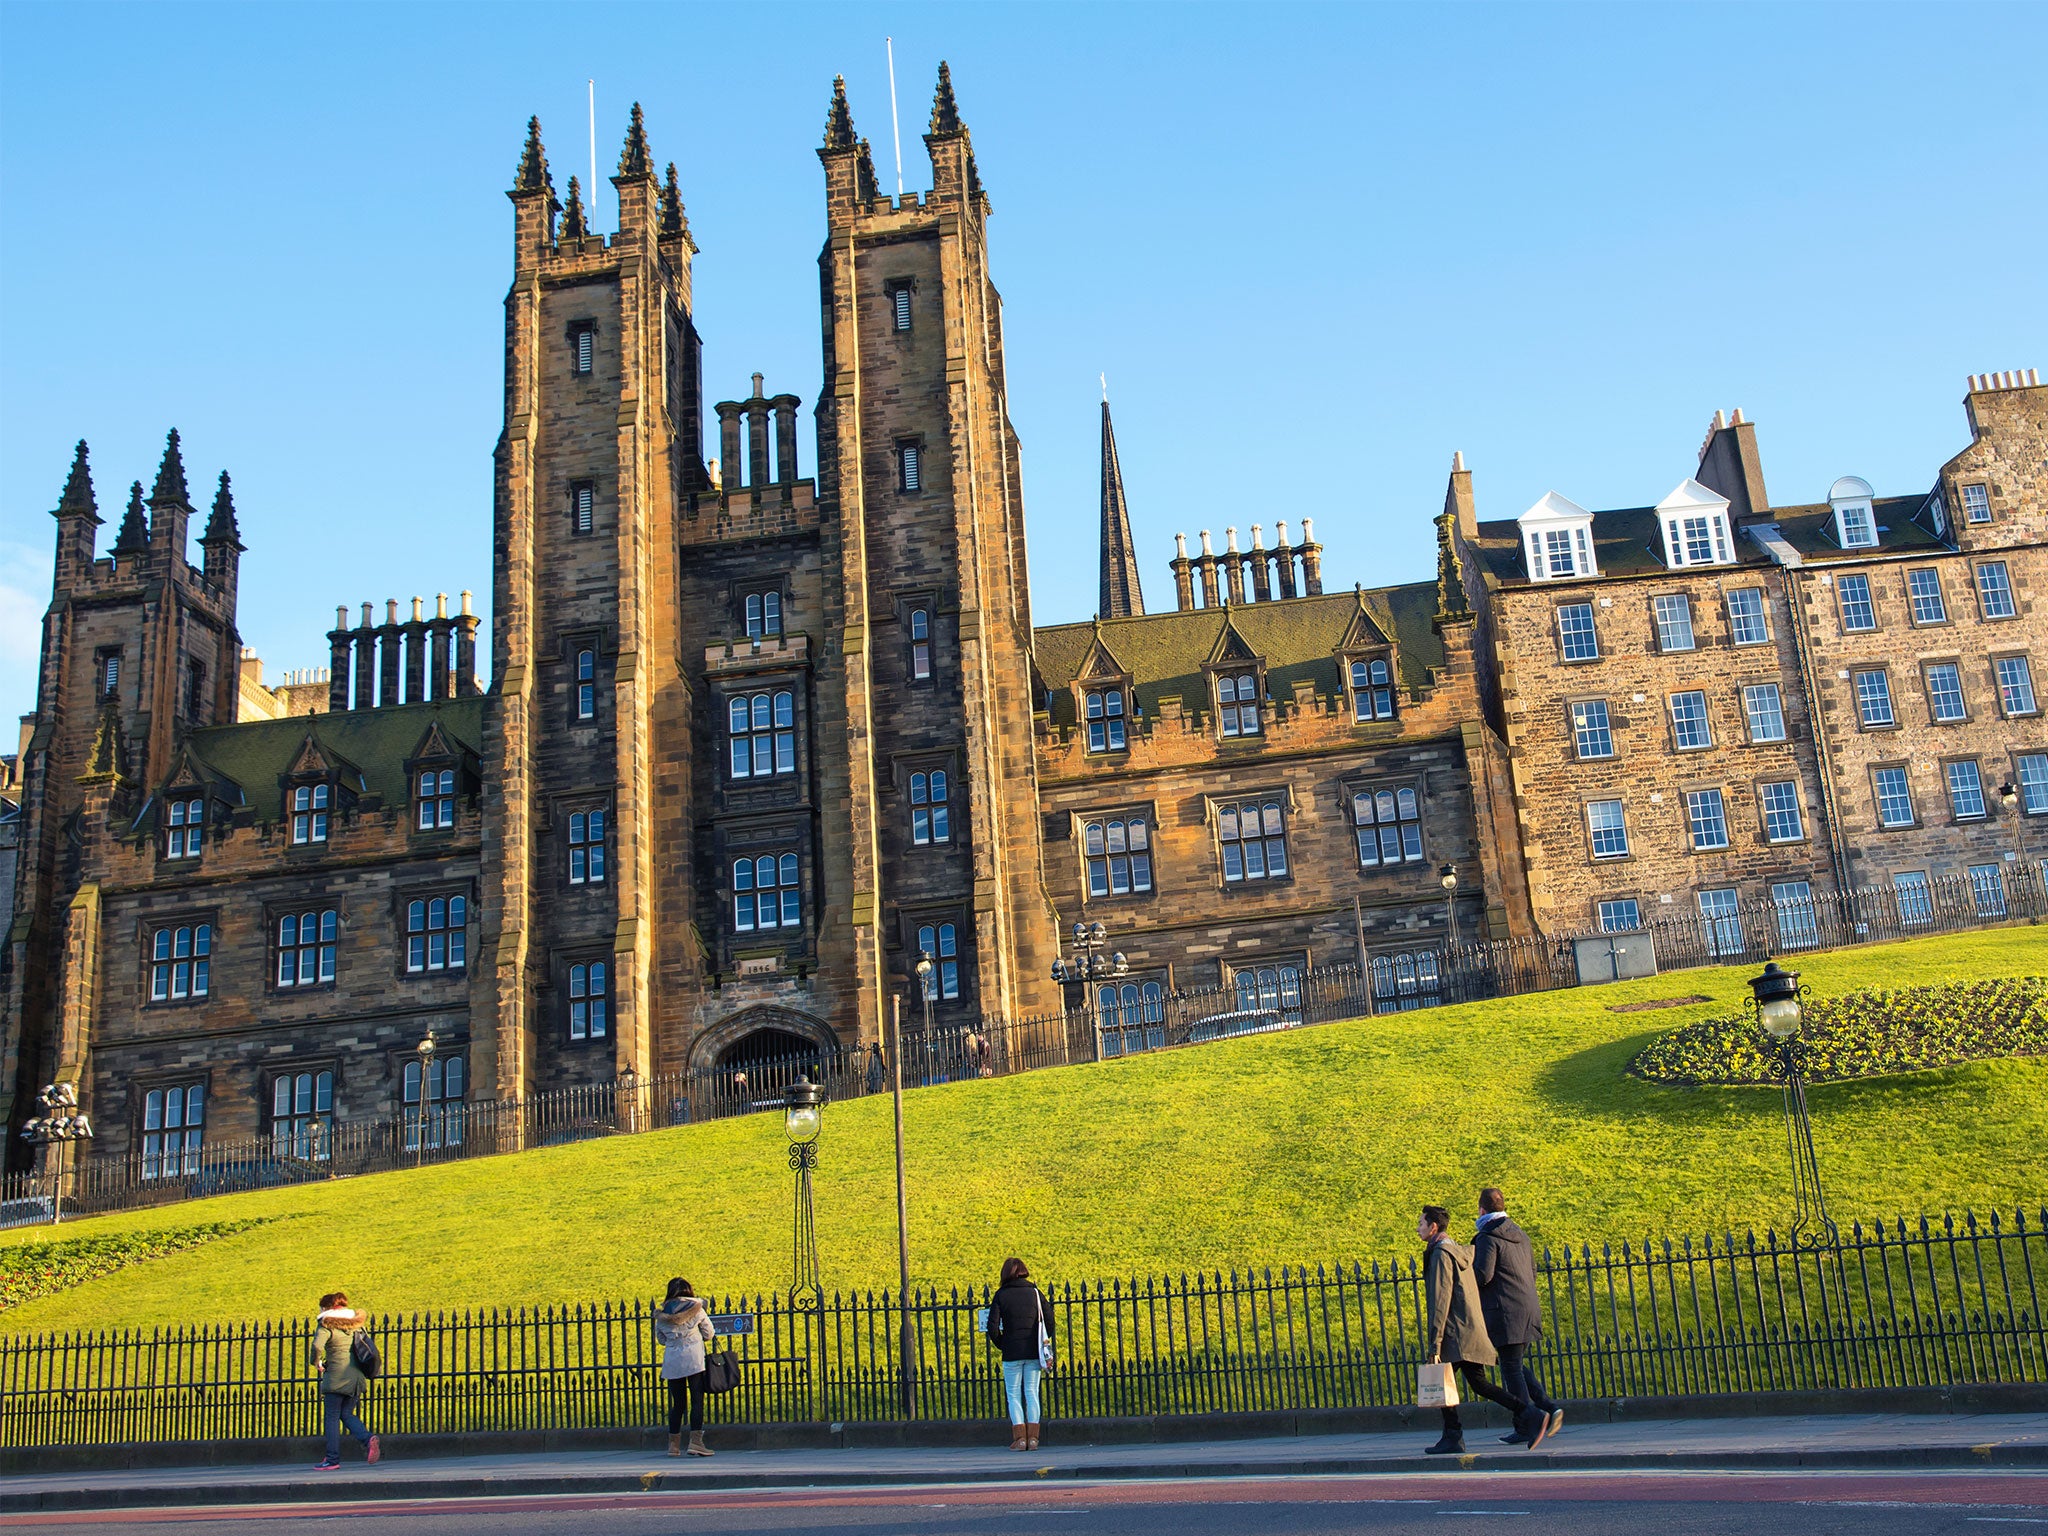 The University of Edinburgh, pictured